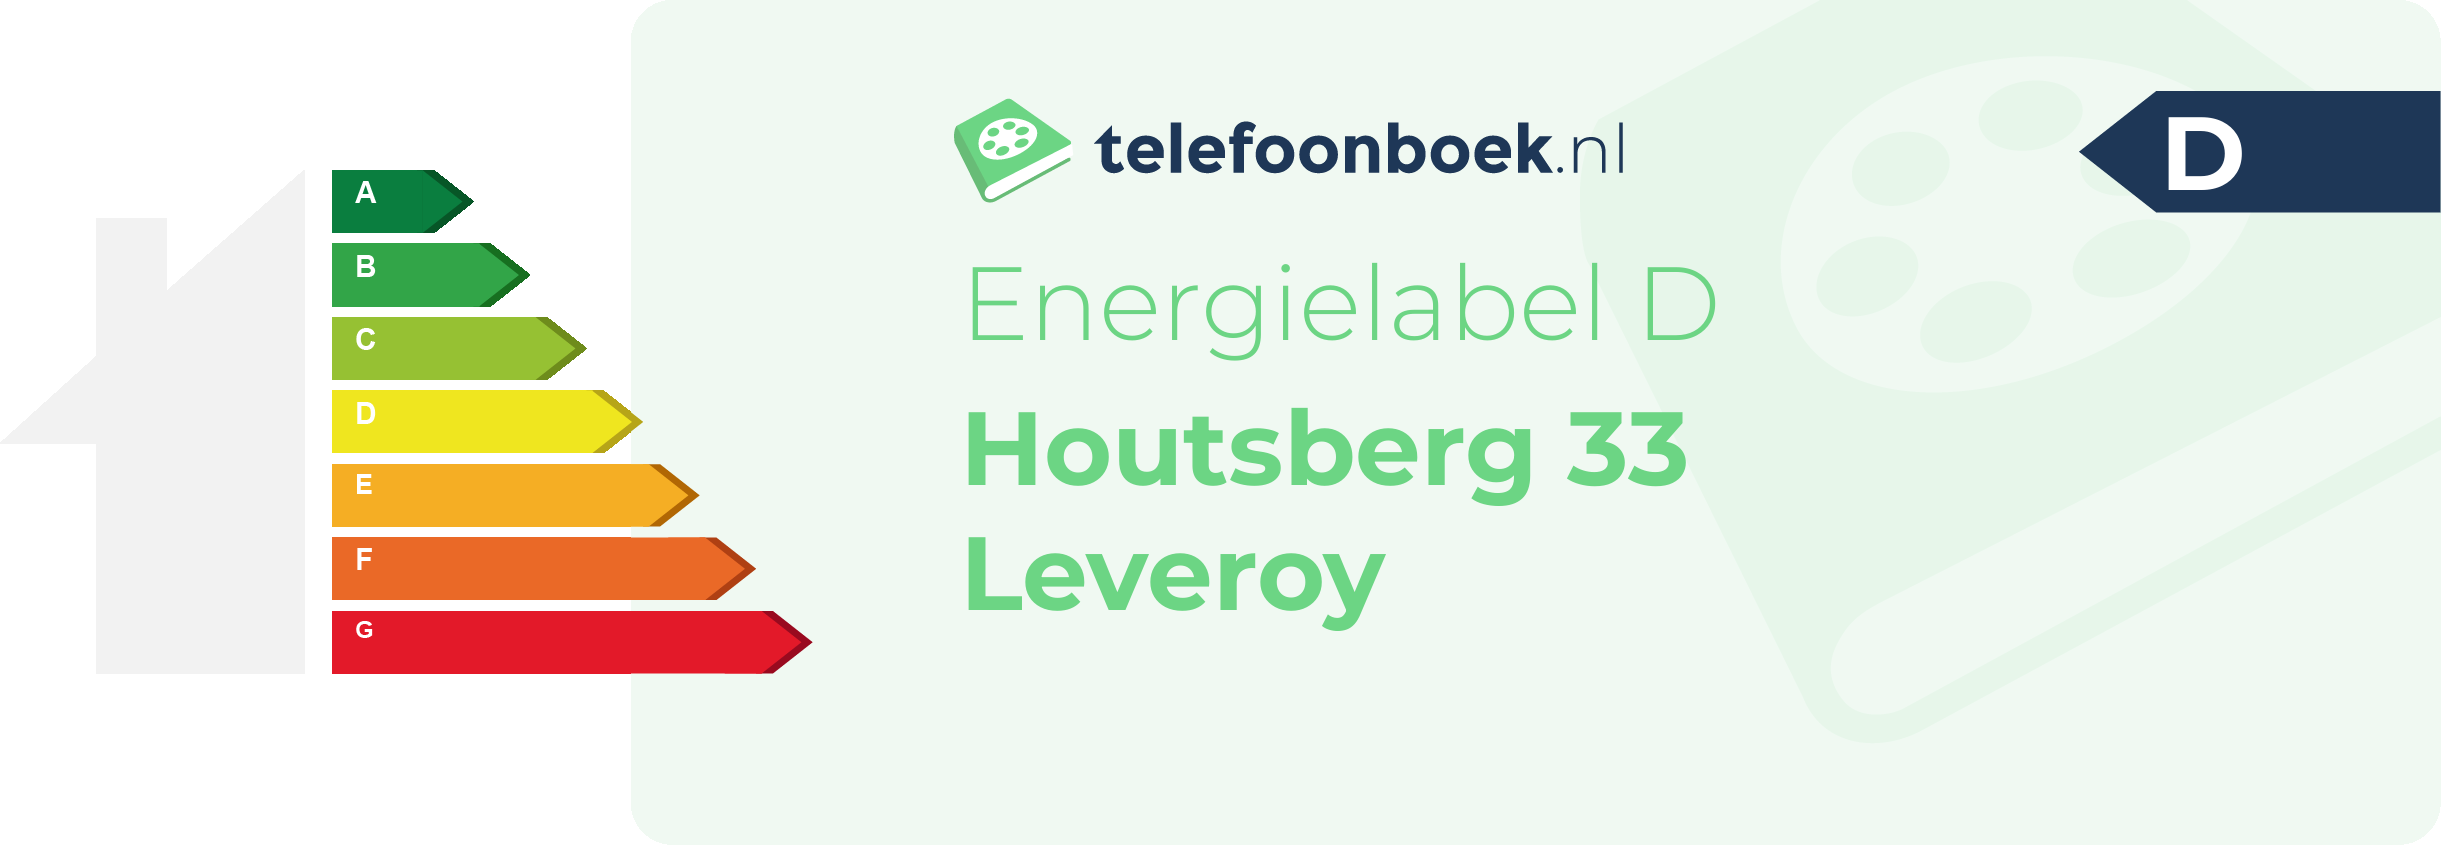 Energielabel Houtsberg 33 Leveroy